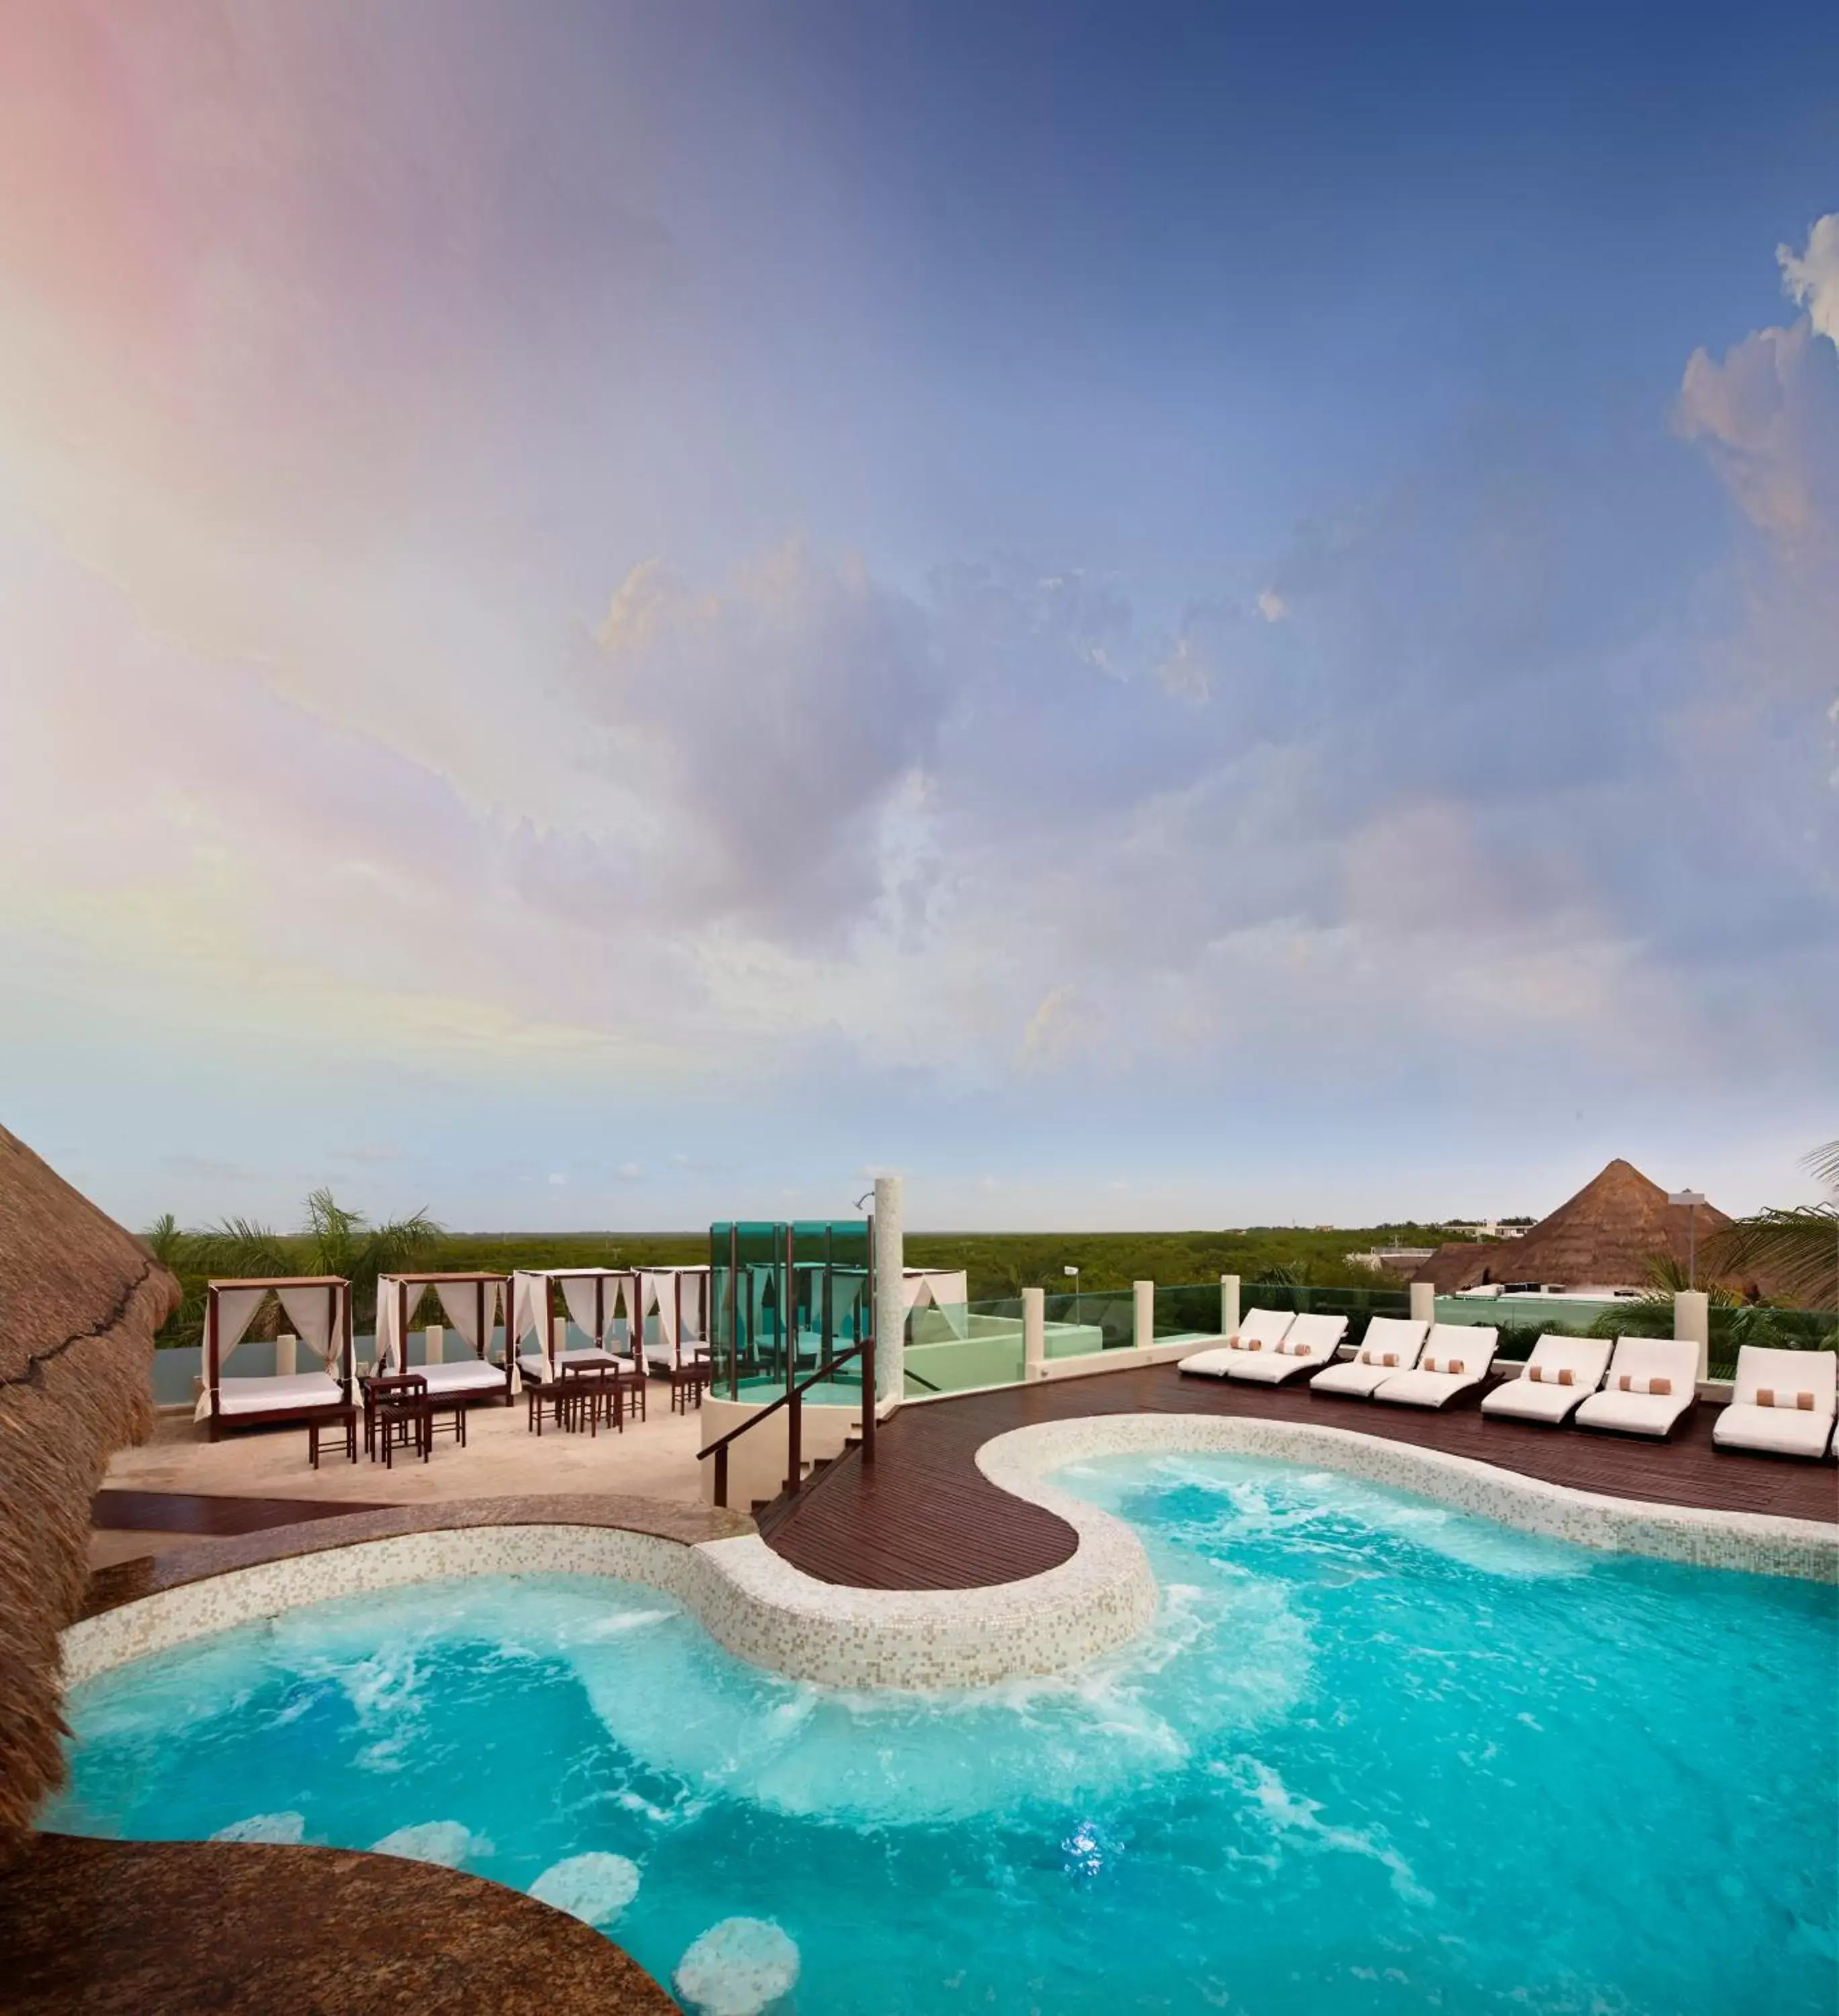 Swimming Pool in Desire Riviera Maya Resort